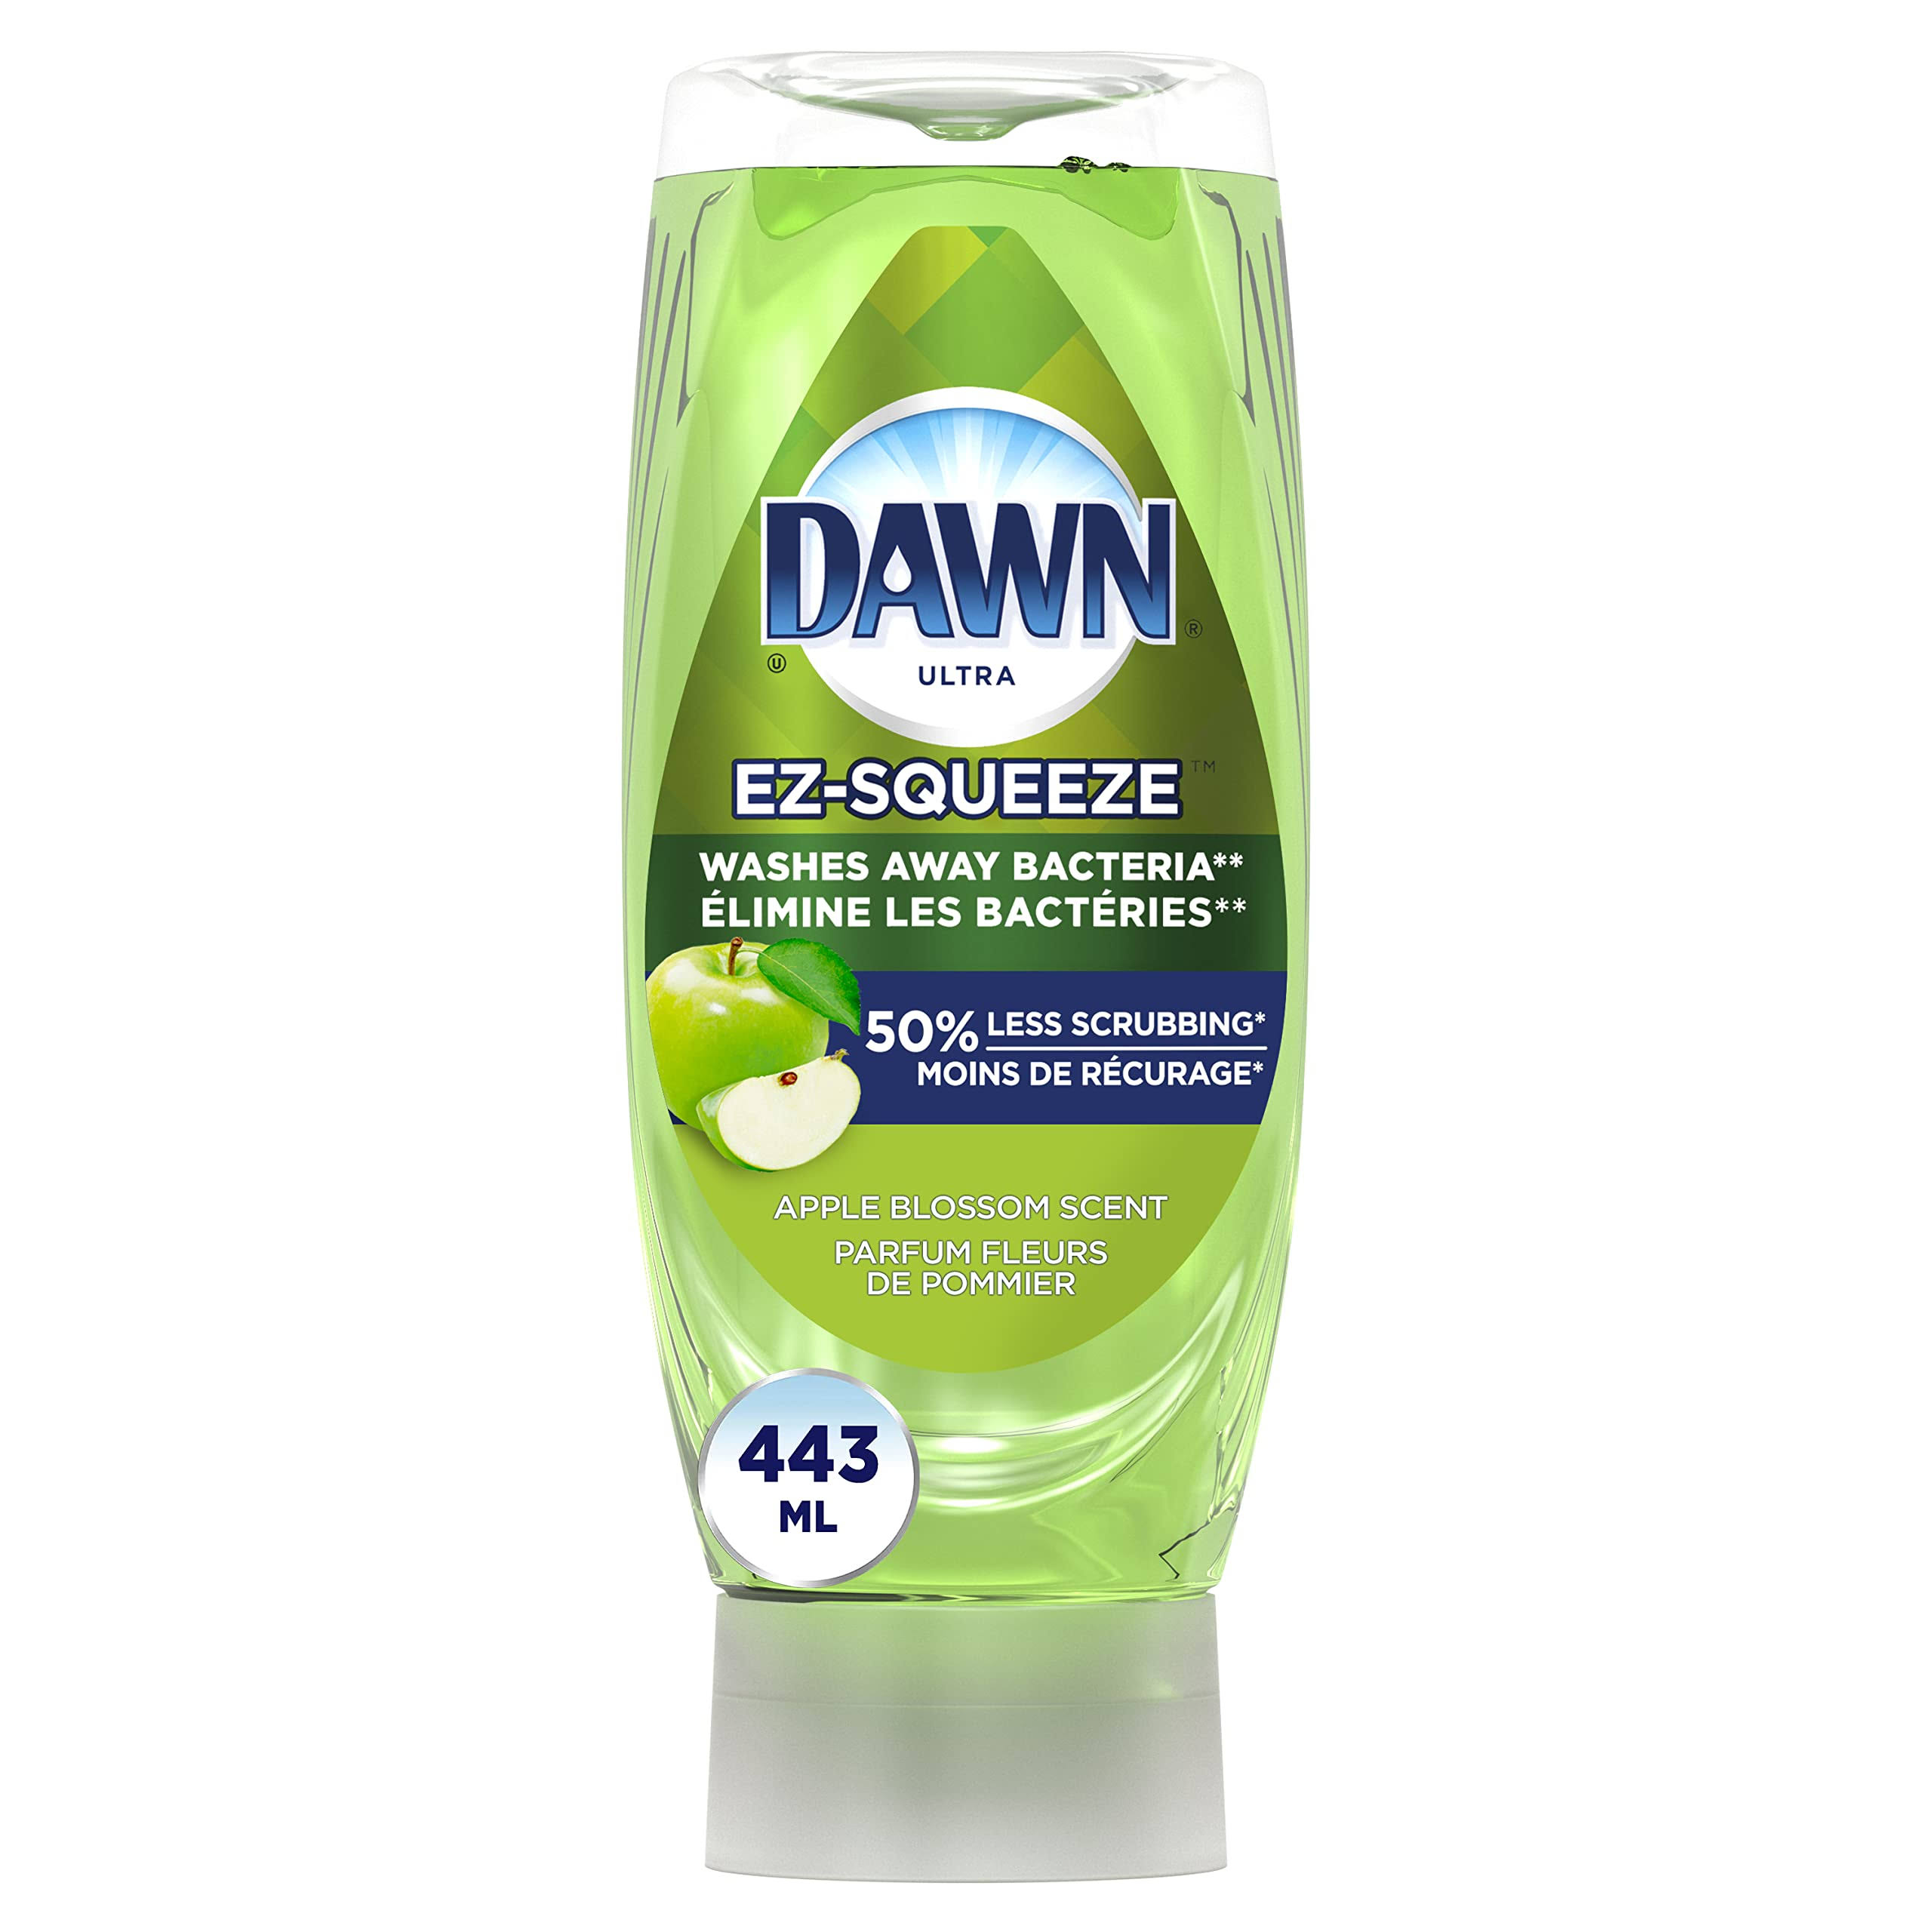 Dawn EZ-Squeeze Ultra Dish Soap, Washes Away Bacteria, Dishwashing Liquid, Apple Blossom Scent, 443ml